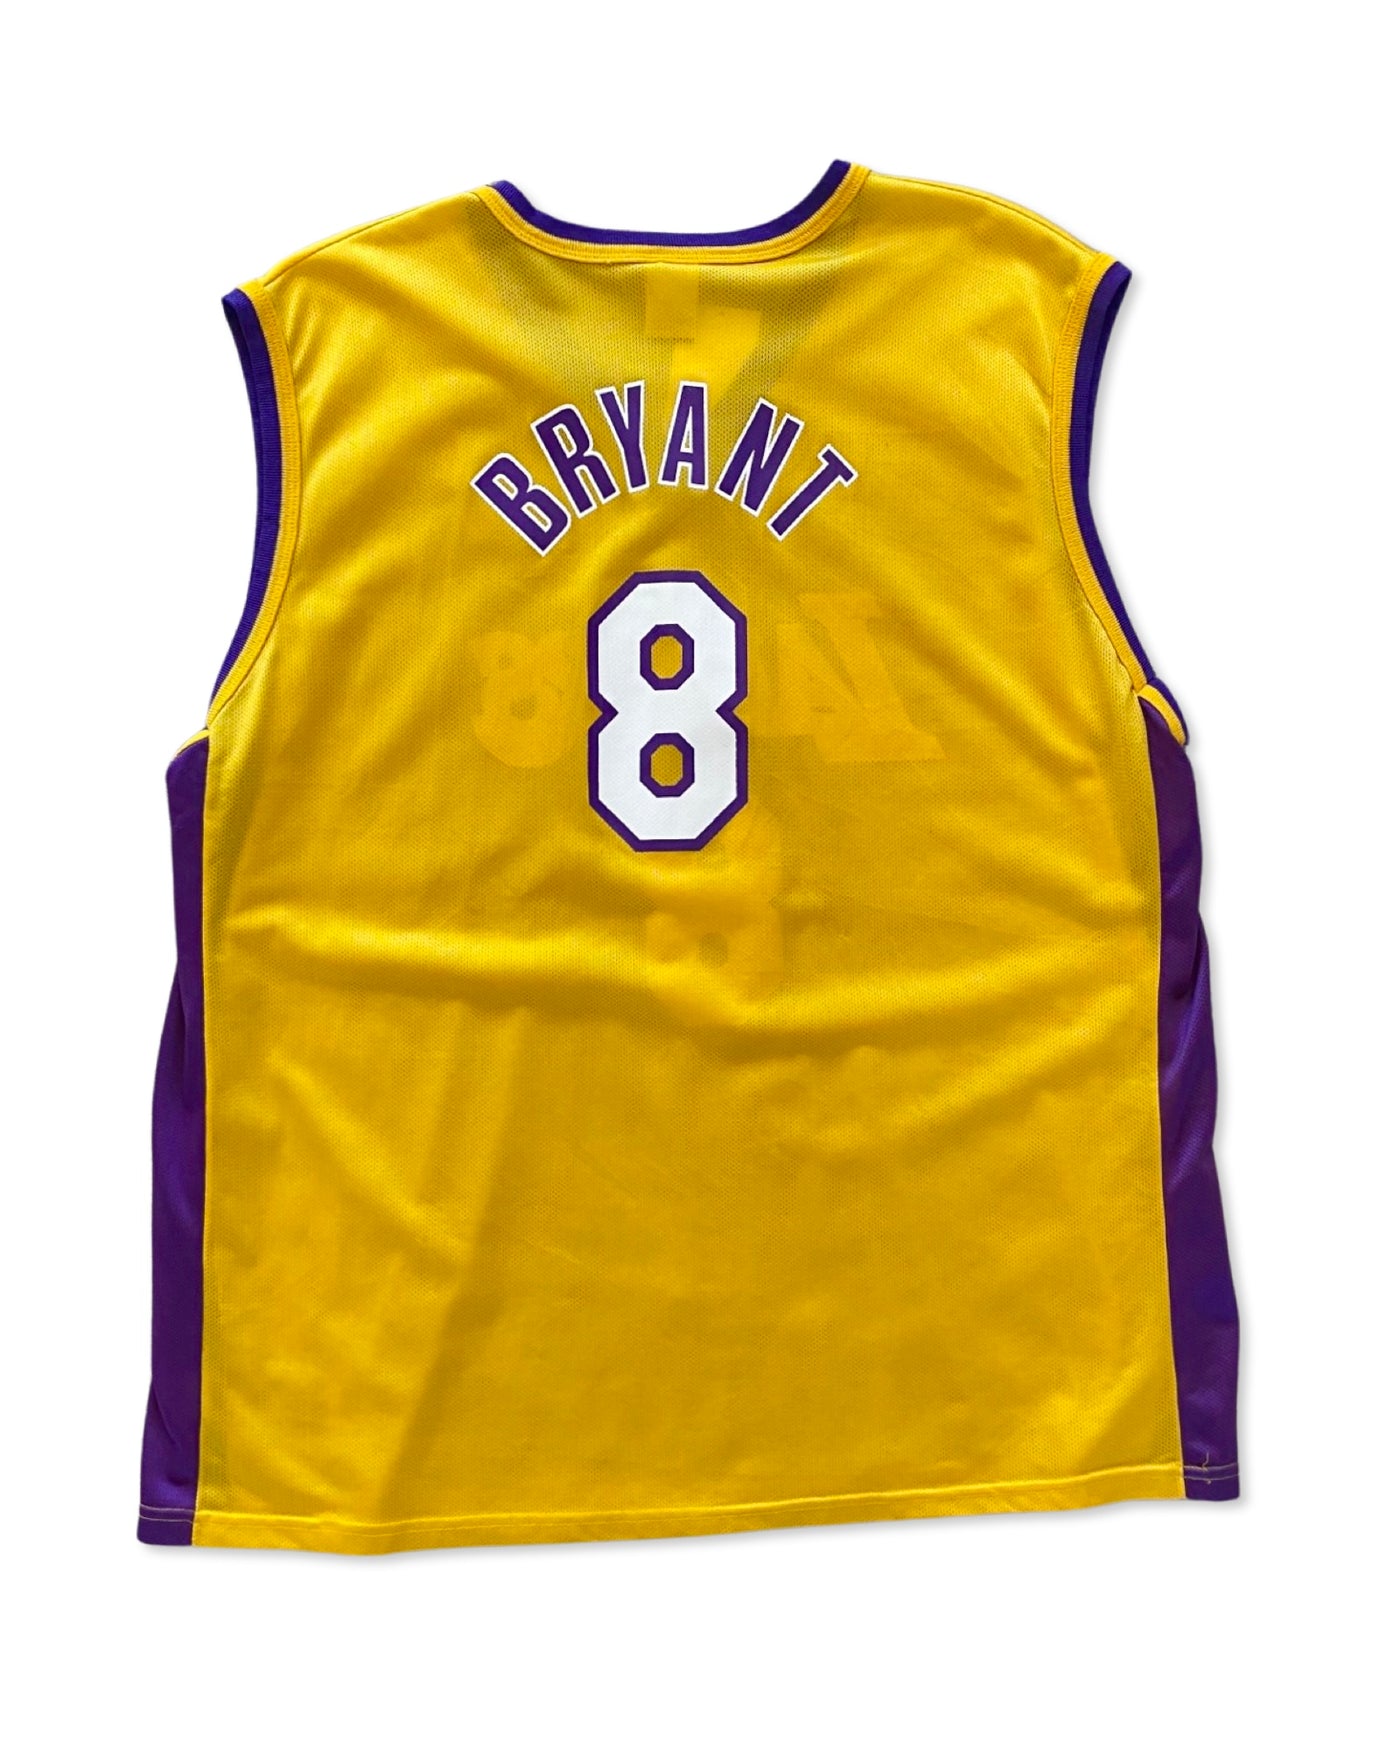 Vintage Champion Kobe Bryant Lakers Jersey